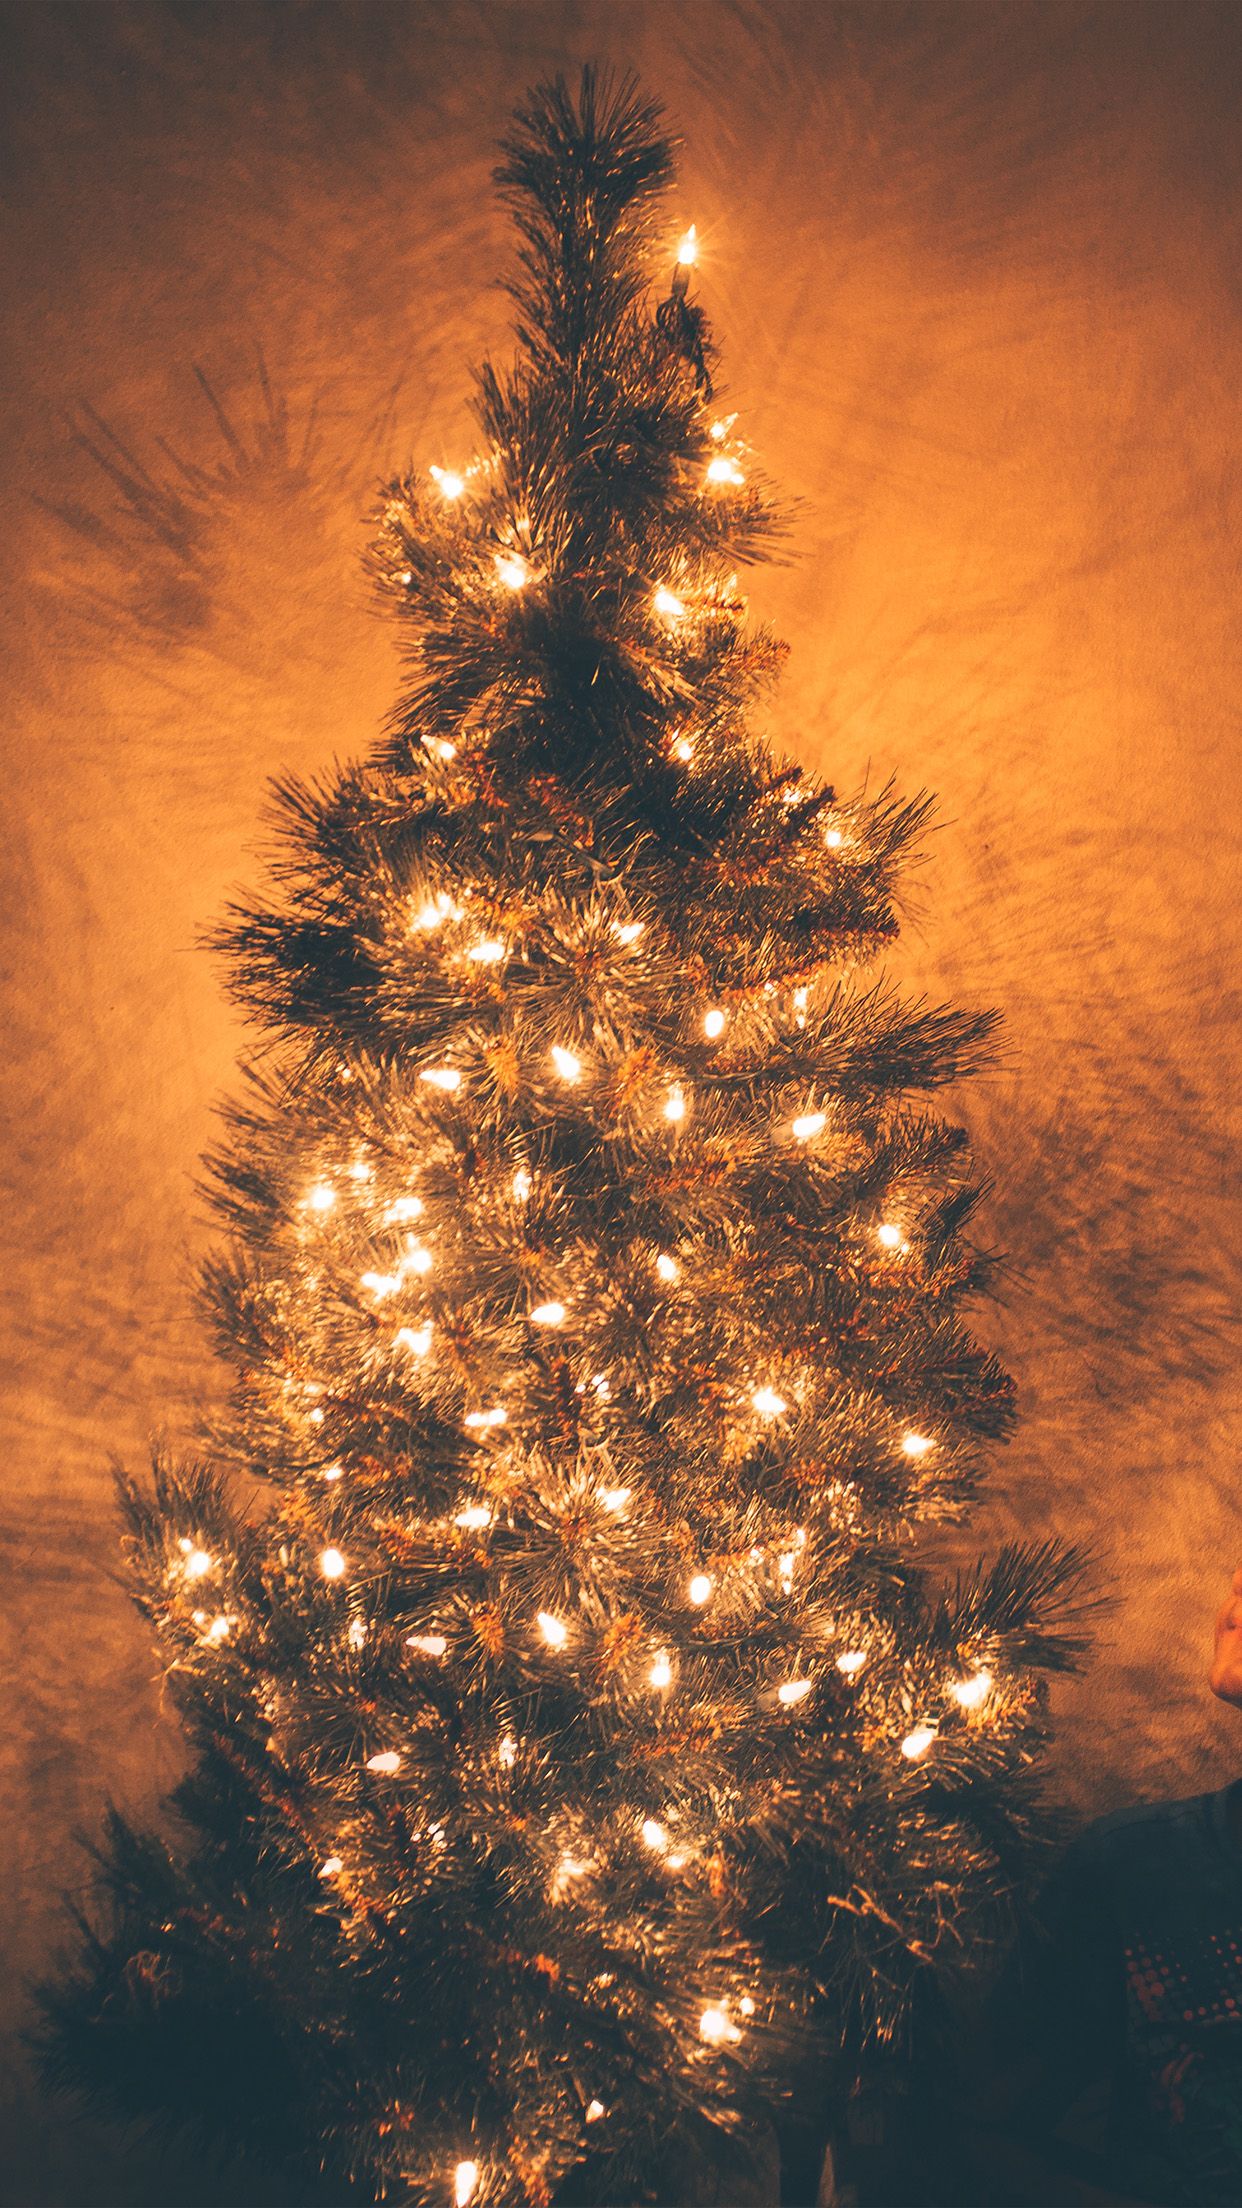 iPhone7 wallpaper. christmas tree light holiday tree nature